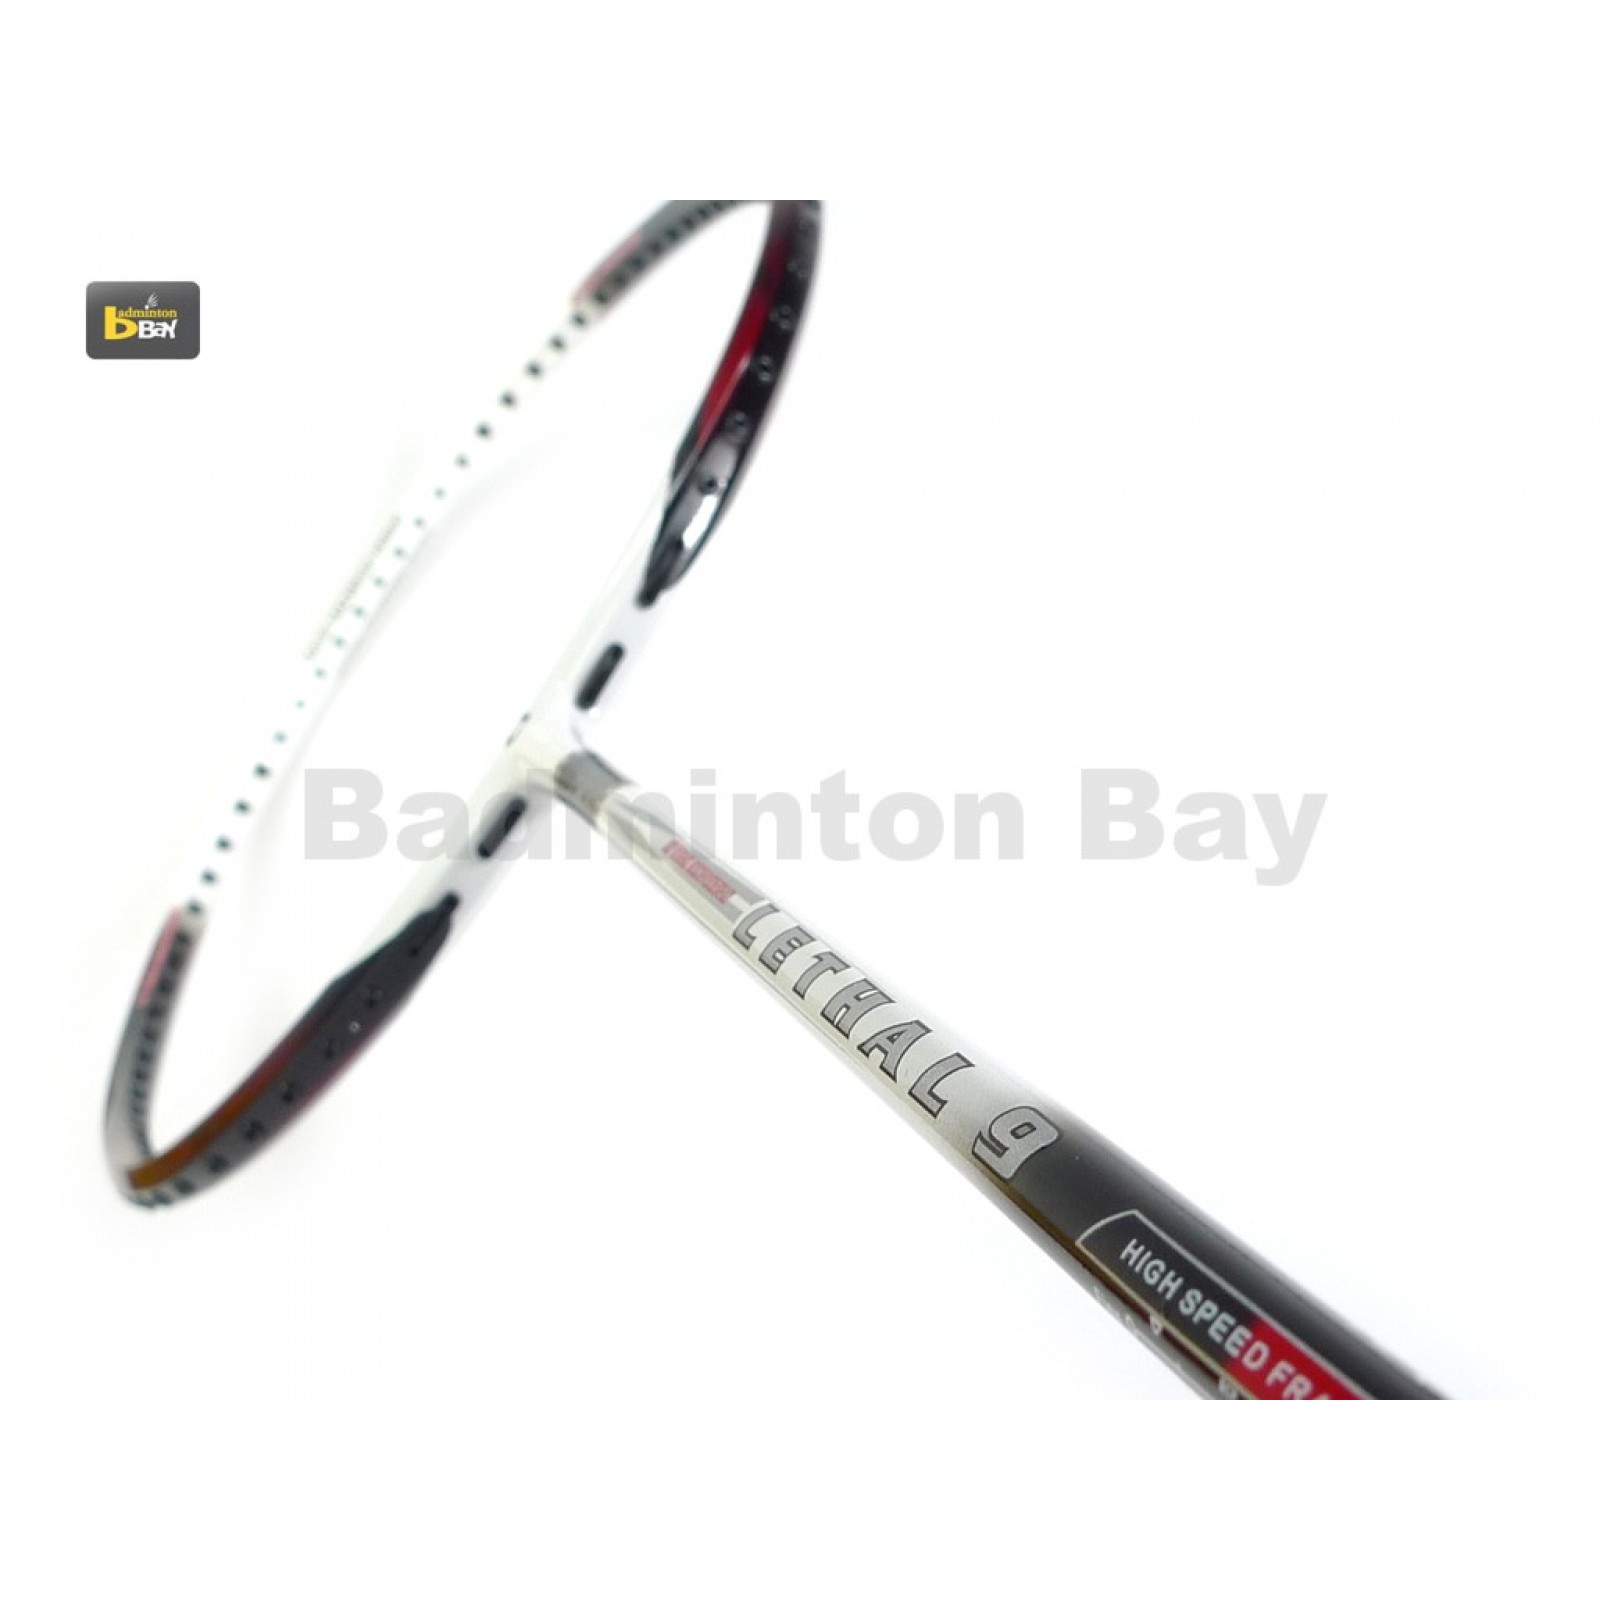 Apacs Badminton Racket Lethal 9